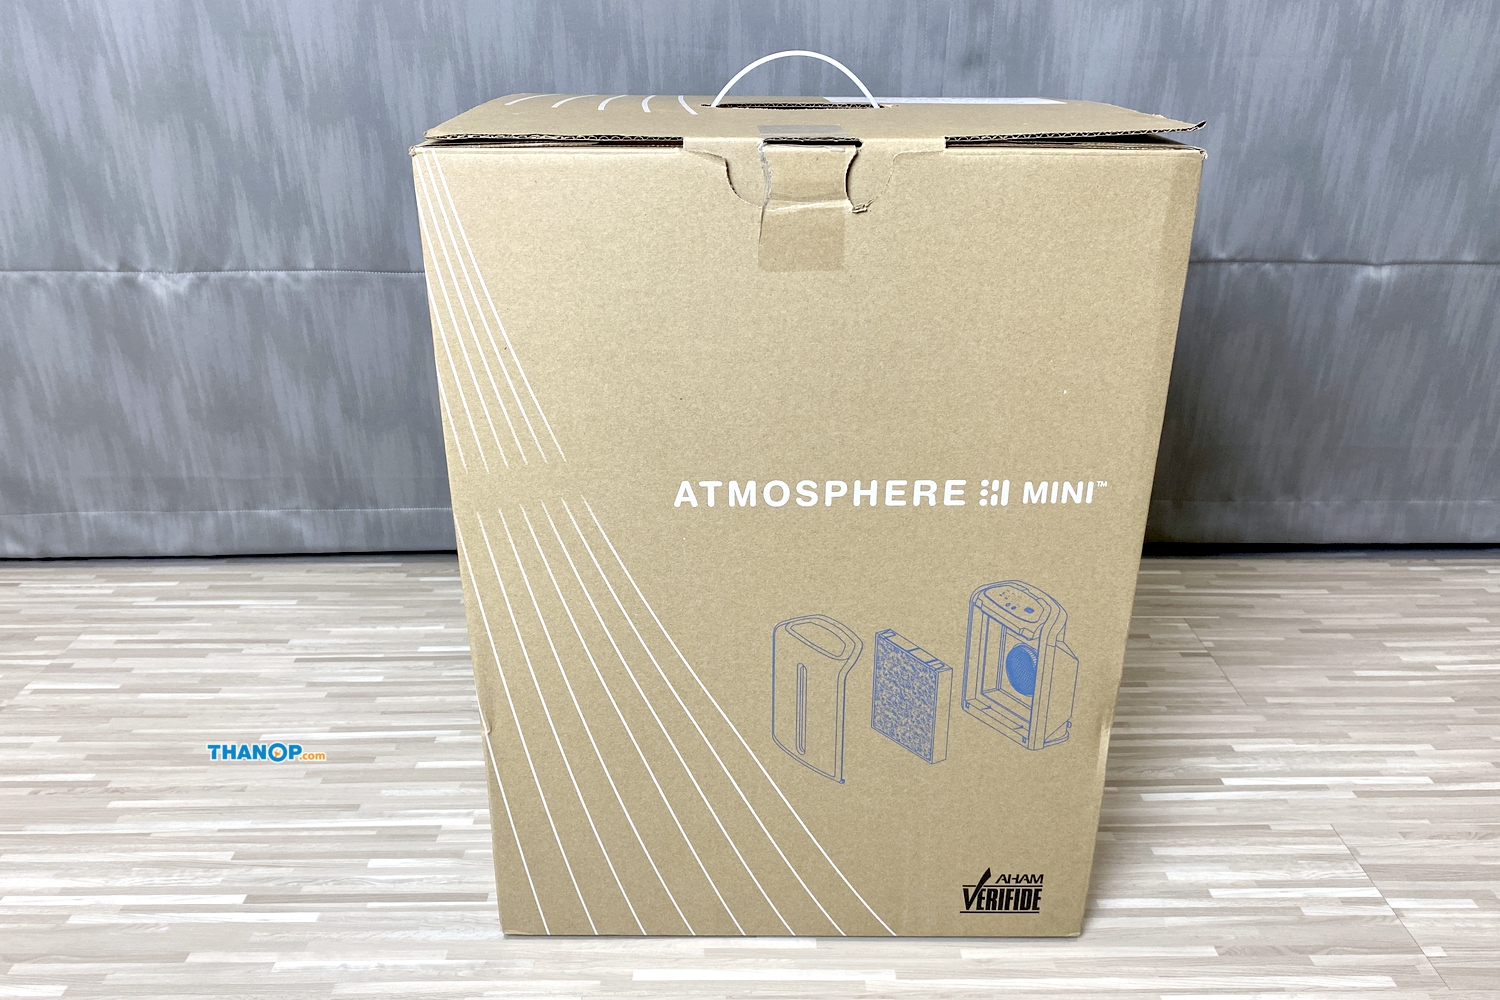 Atmosphere mini